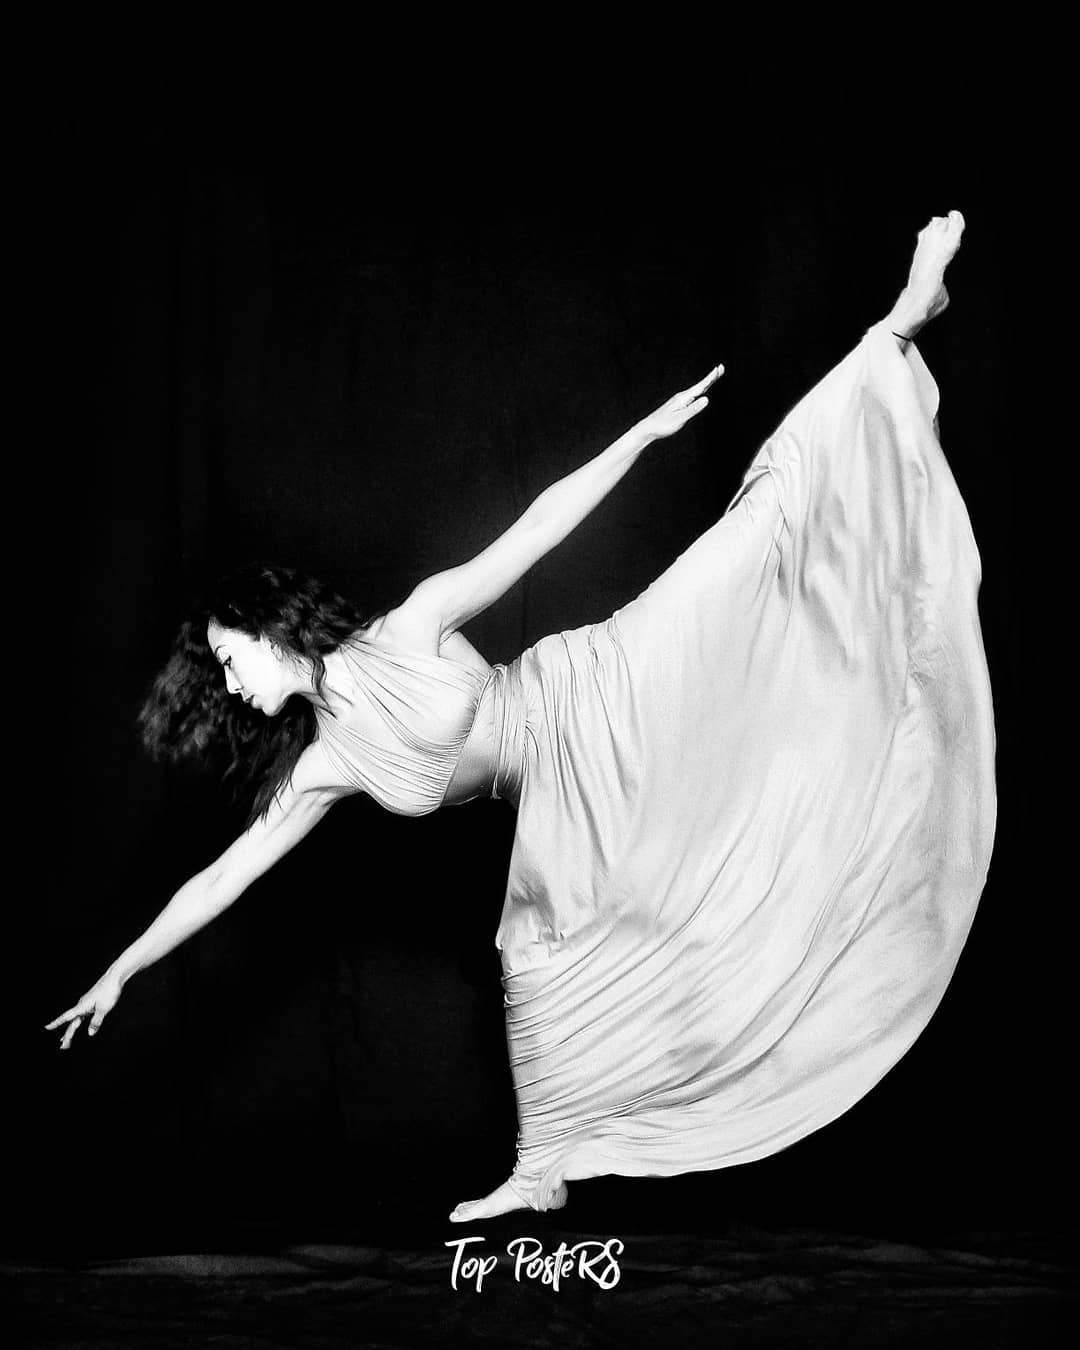 ...
HOMAGE TO MARTHA GRAHAM
HOMENAJE A MARTHA GRAHAM

MAGAZINE EDITORIAL
EDITORIAL DE REVISTA
TOP Posters Magazine 

PORTRAIT RETRATO
Beautiful, Pris Vásquez
In her dance studio

📷 © @spiro_photographer - Instagram
Spiro Polichronopoulos 
SPIRO / Photographer 

💃 @prisvaqz - Instagram
Pris Vázquez  Stage Pris Vazquez 
@stage_estudio_d_baile - Instagram
STAGE Estudio de baile 

#toppostes #marthagraham #homage #photodance #dancer #danza #baile #bailarina #dancephotography #fotodedanza #ballet #editorial #portraitphotography #portrait #retrato #analoguephotography #analogue #analog #filmphotography #film #stage #mexico #mexicofotografo #oaxaca #oaxacafotografo